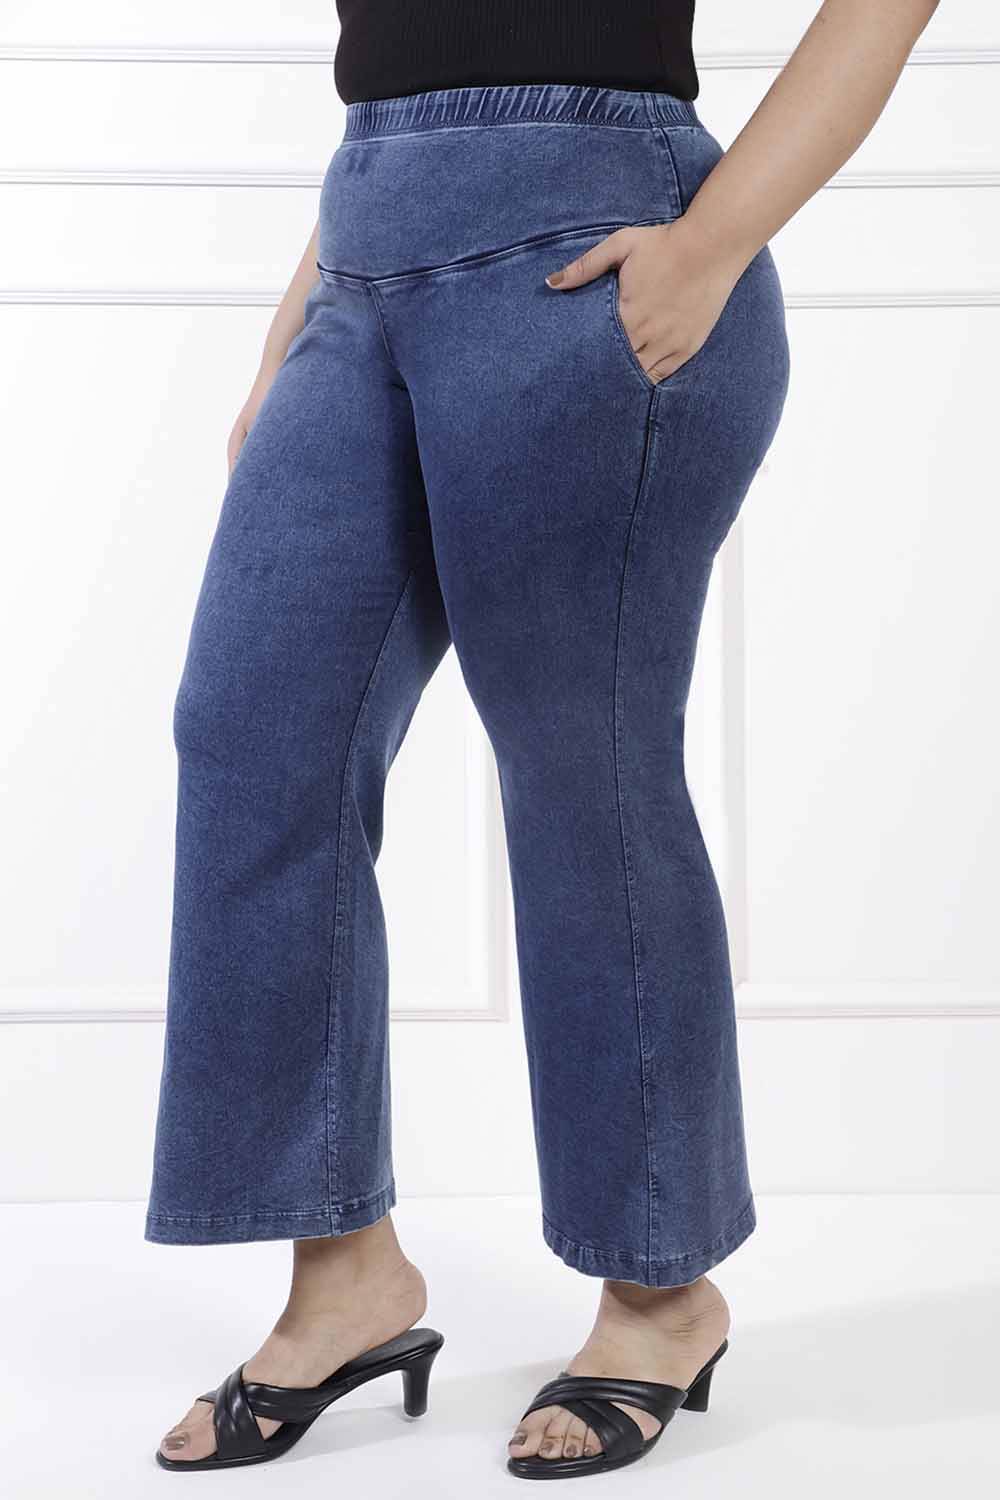 Plus Size Yale Blue Flare Jeans